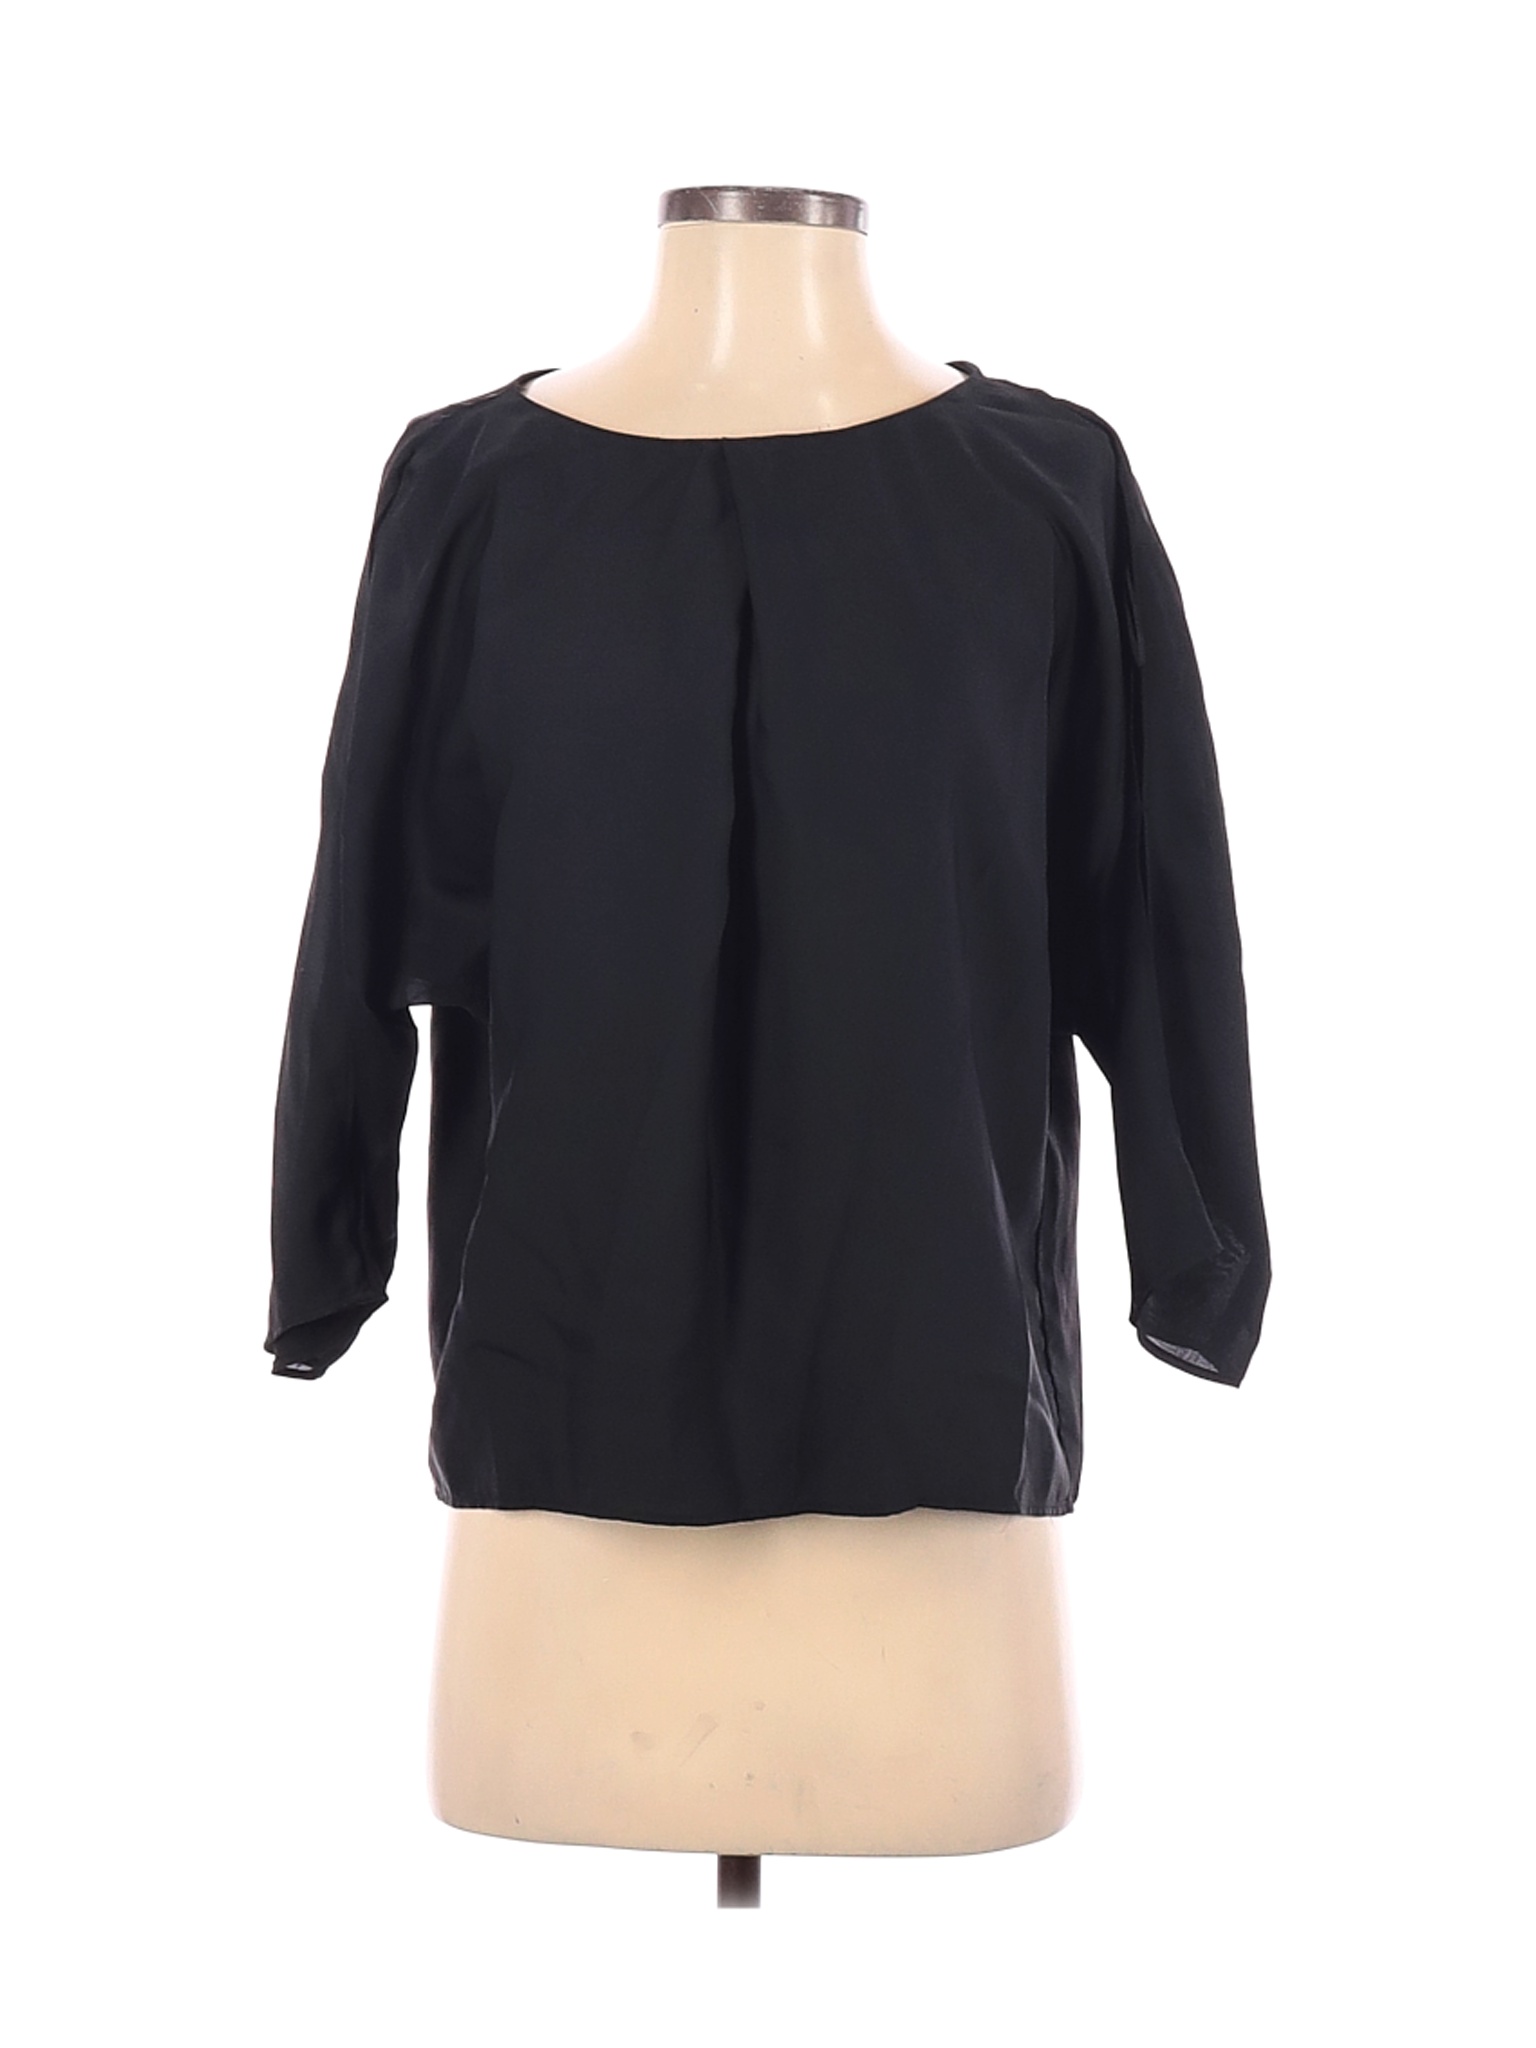 RACHEL Rachel Roy Women Black 3/4 Sleeve Blouse S | eBay